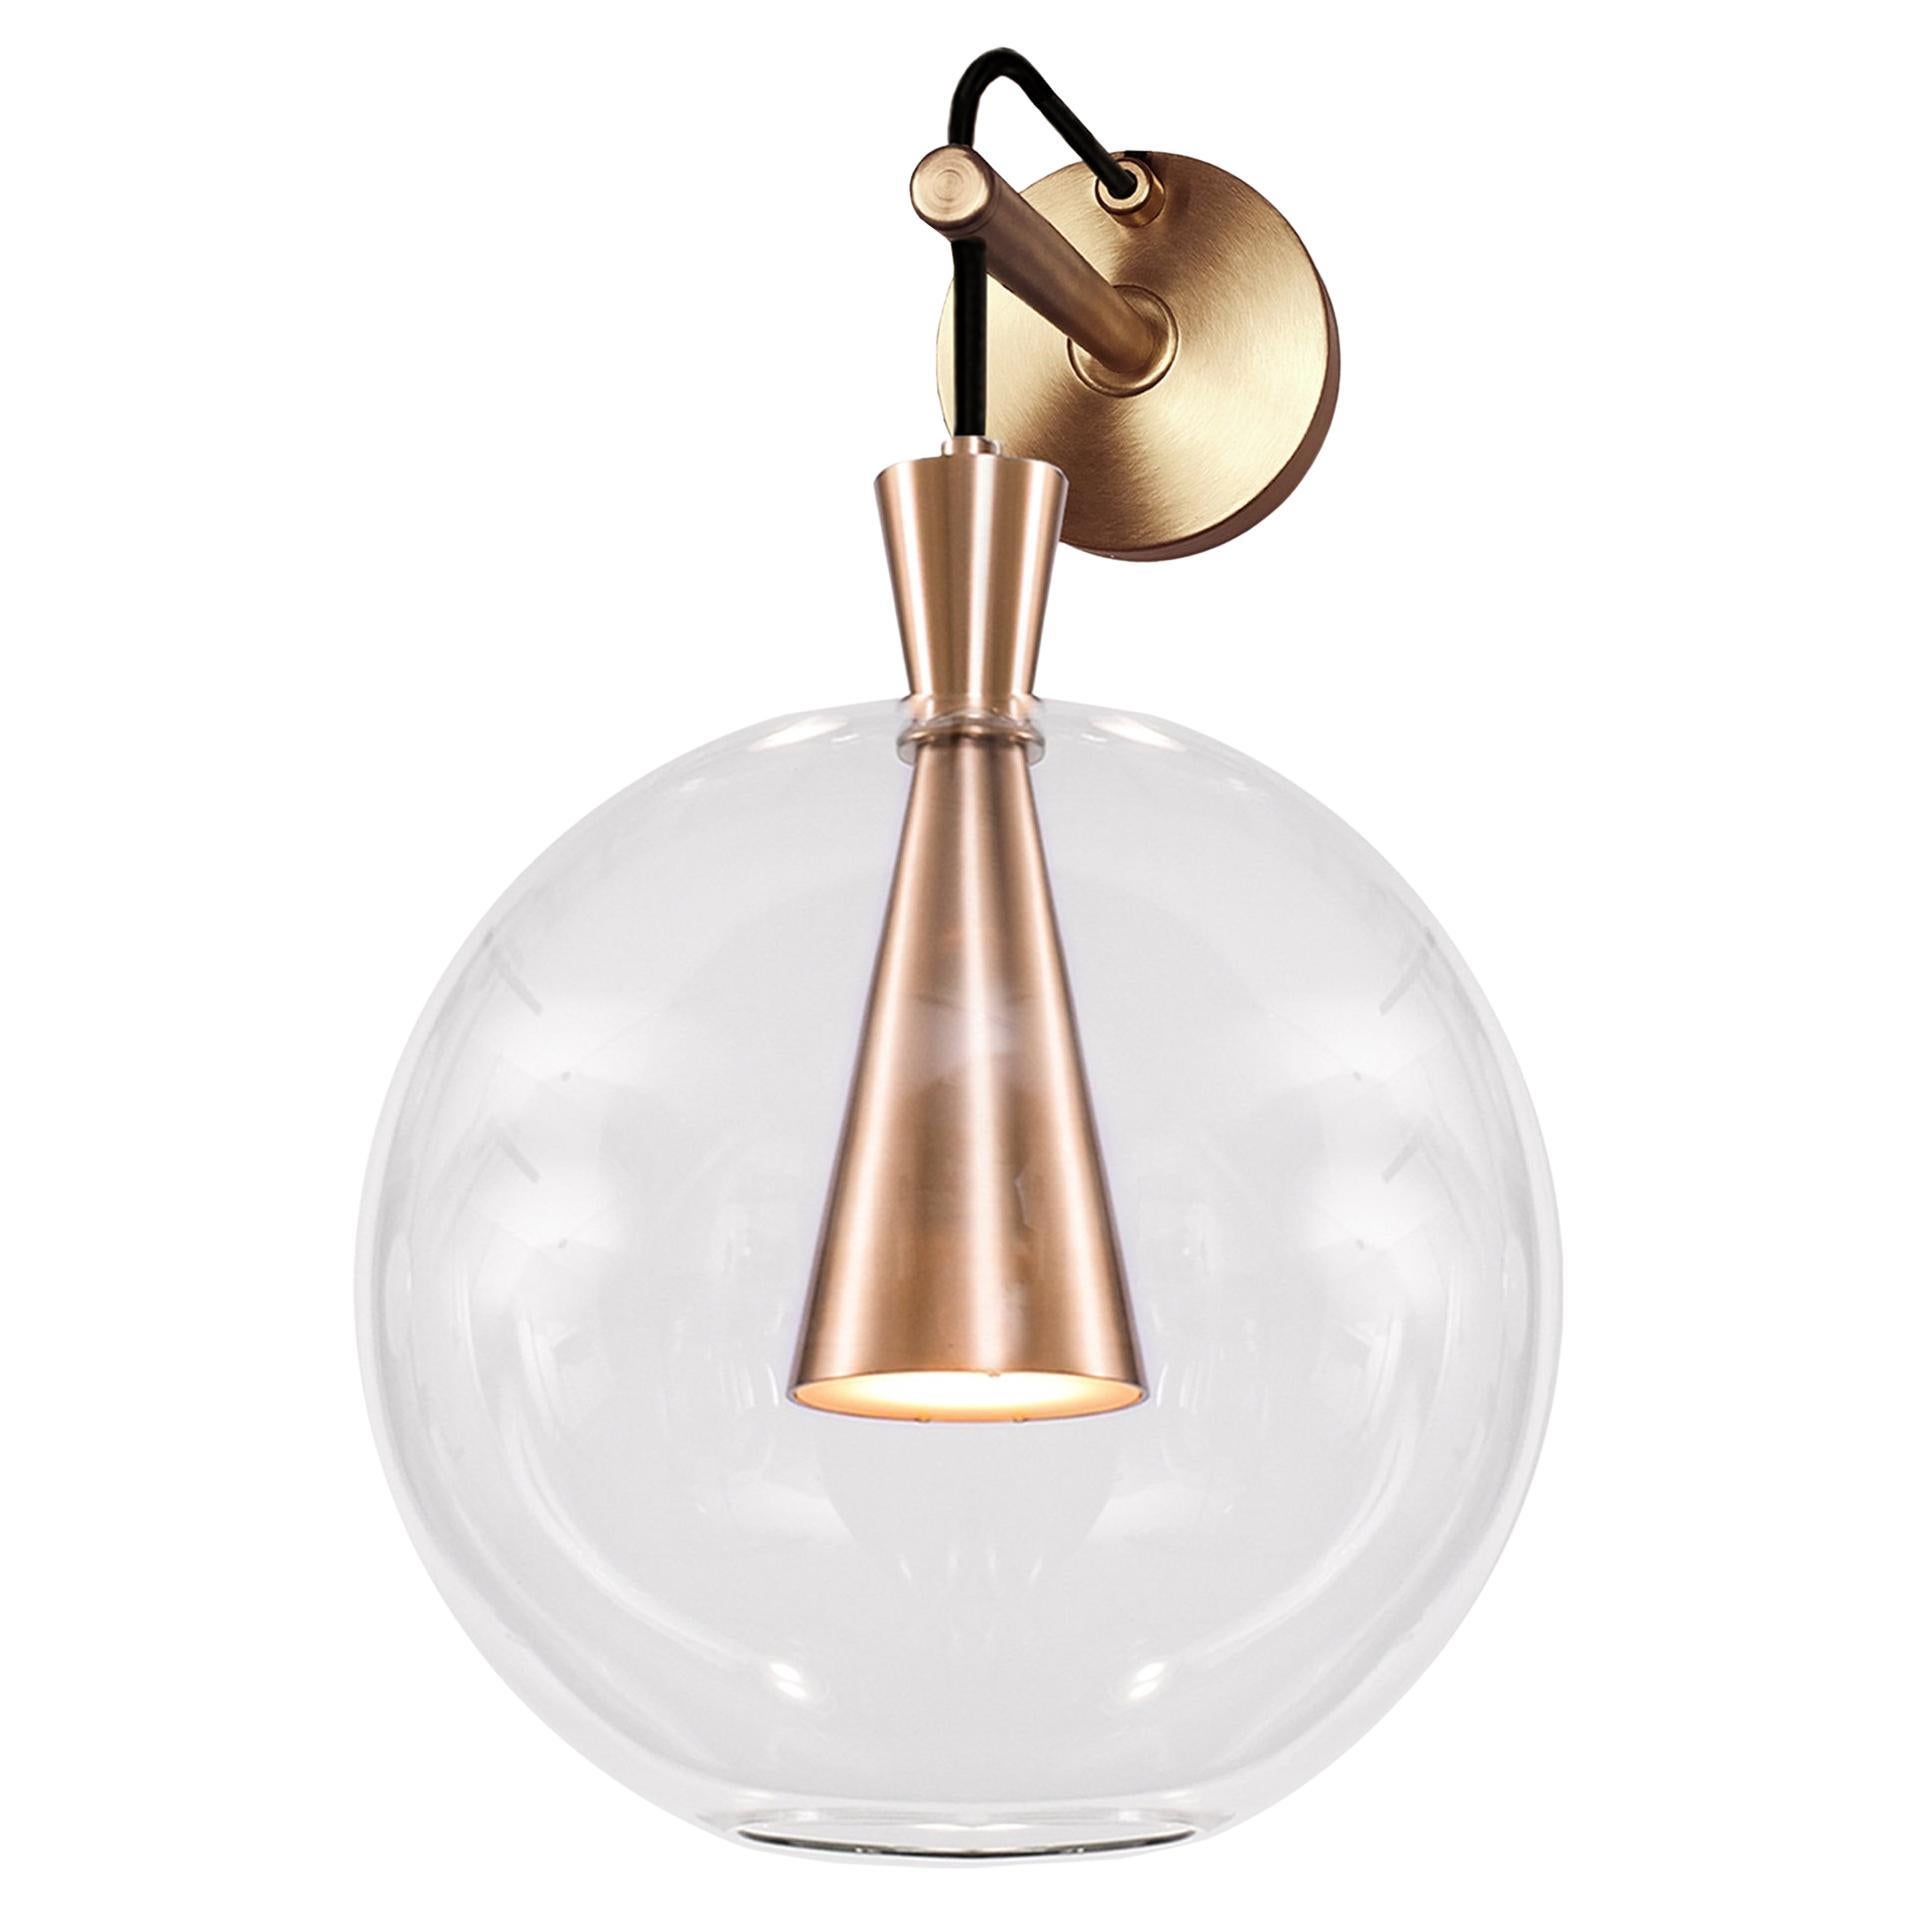 Cone Wall Lamp & Shade, Medium by Marc Wood, Handmade Brass Lamp w/GU10 Bulb